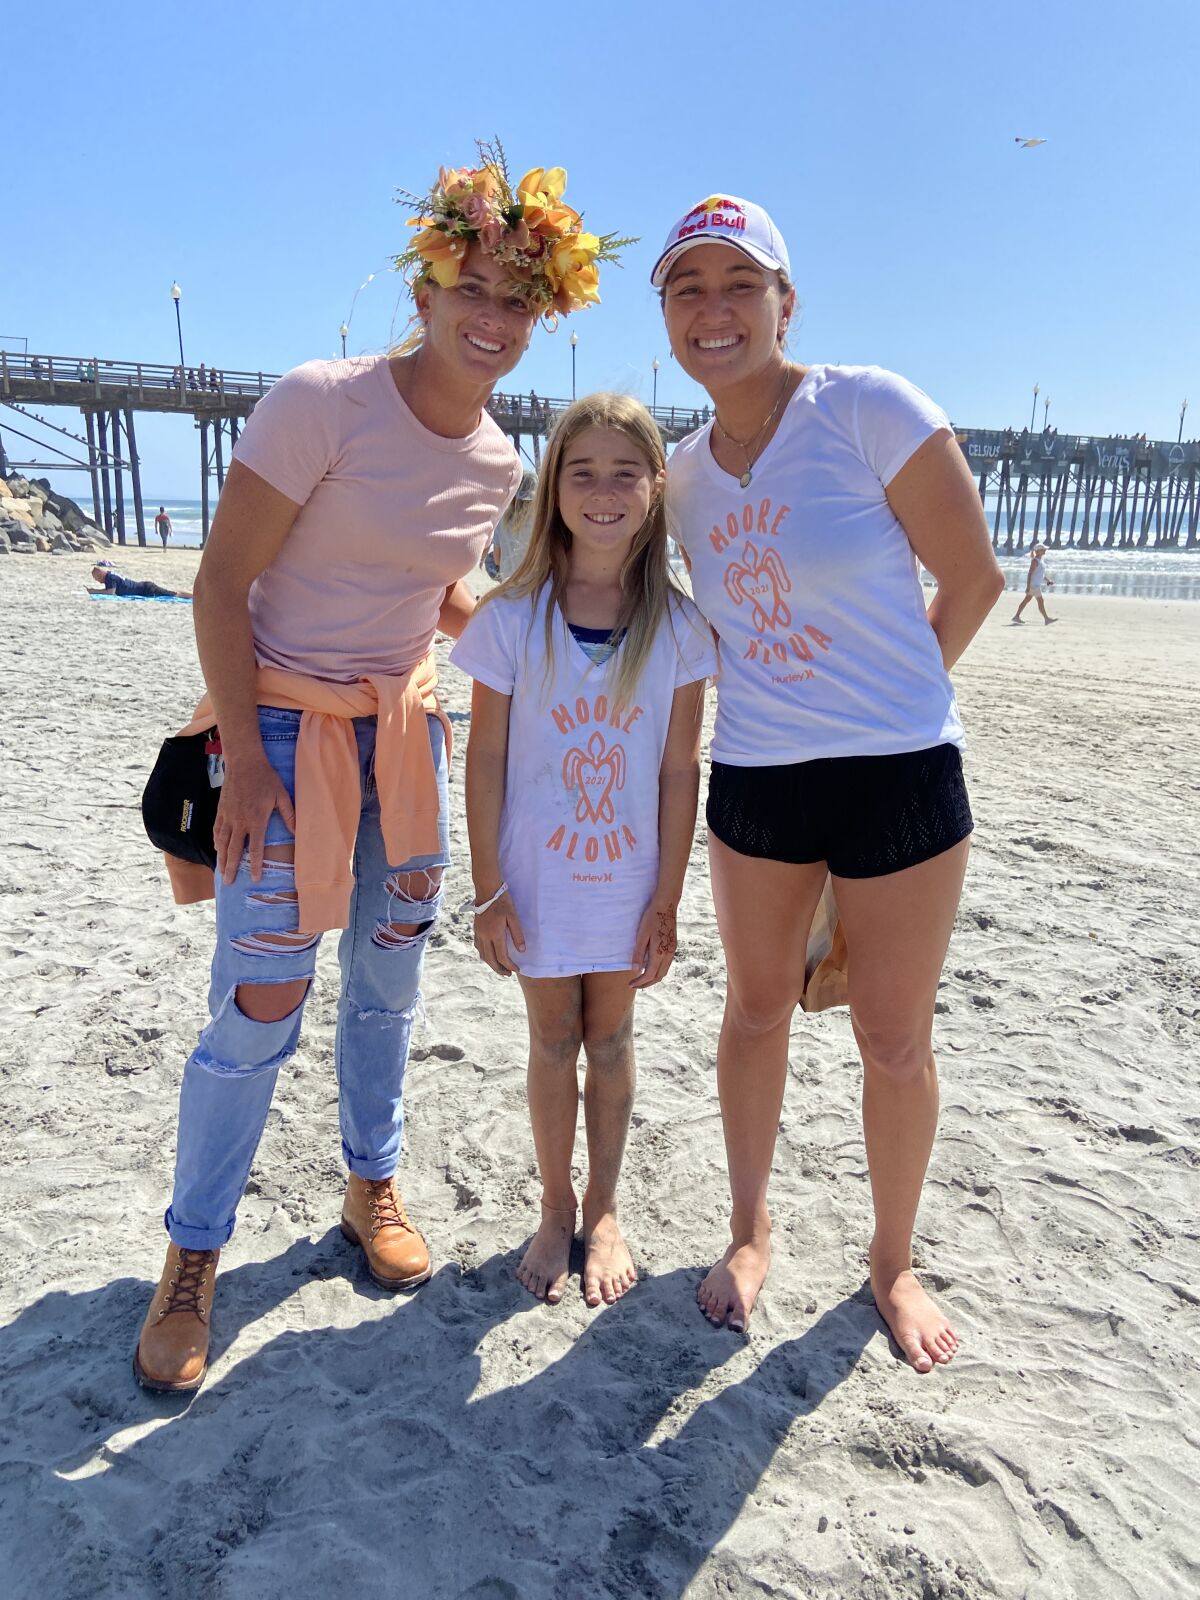 Pro surfer Lakey Peterson, La Jolla fifth-grader Catalina McDonnell and pro surfer Carissa Moore